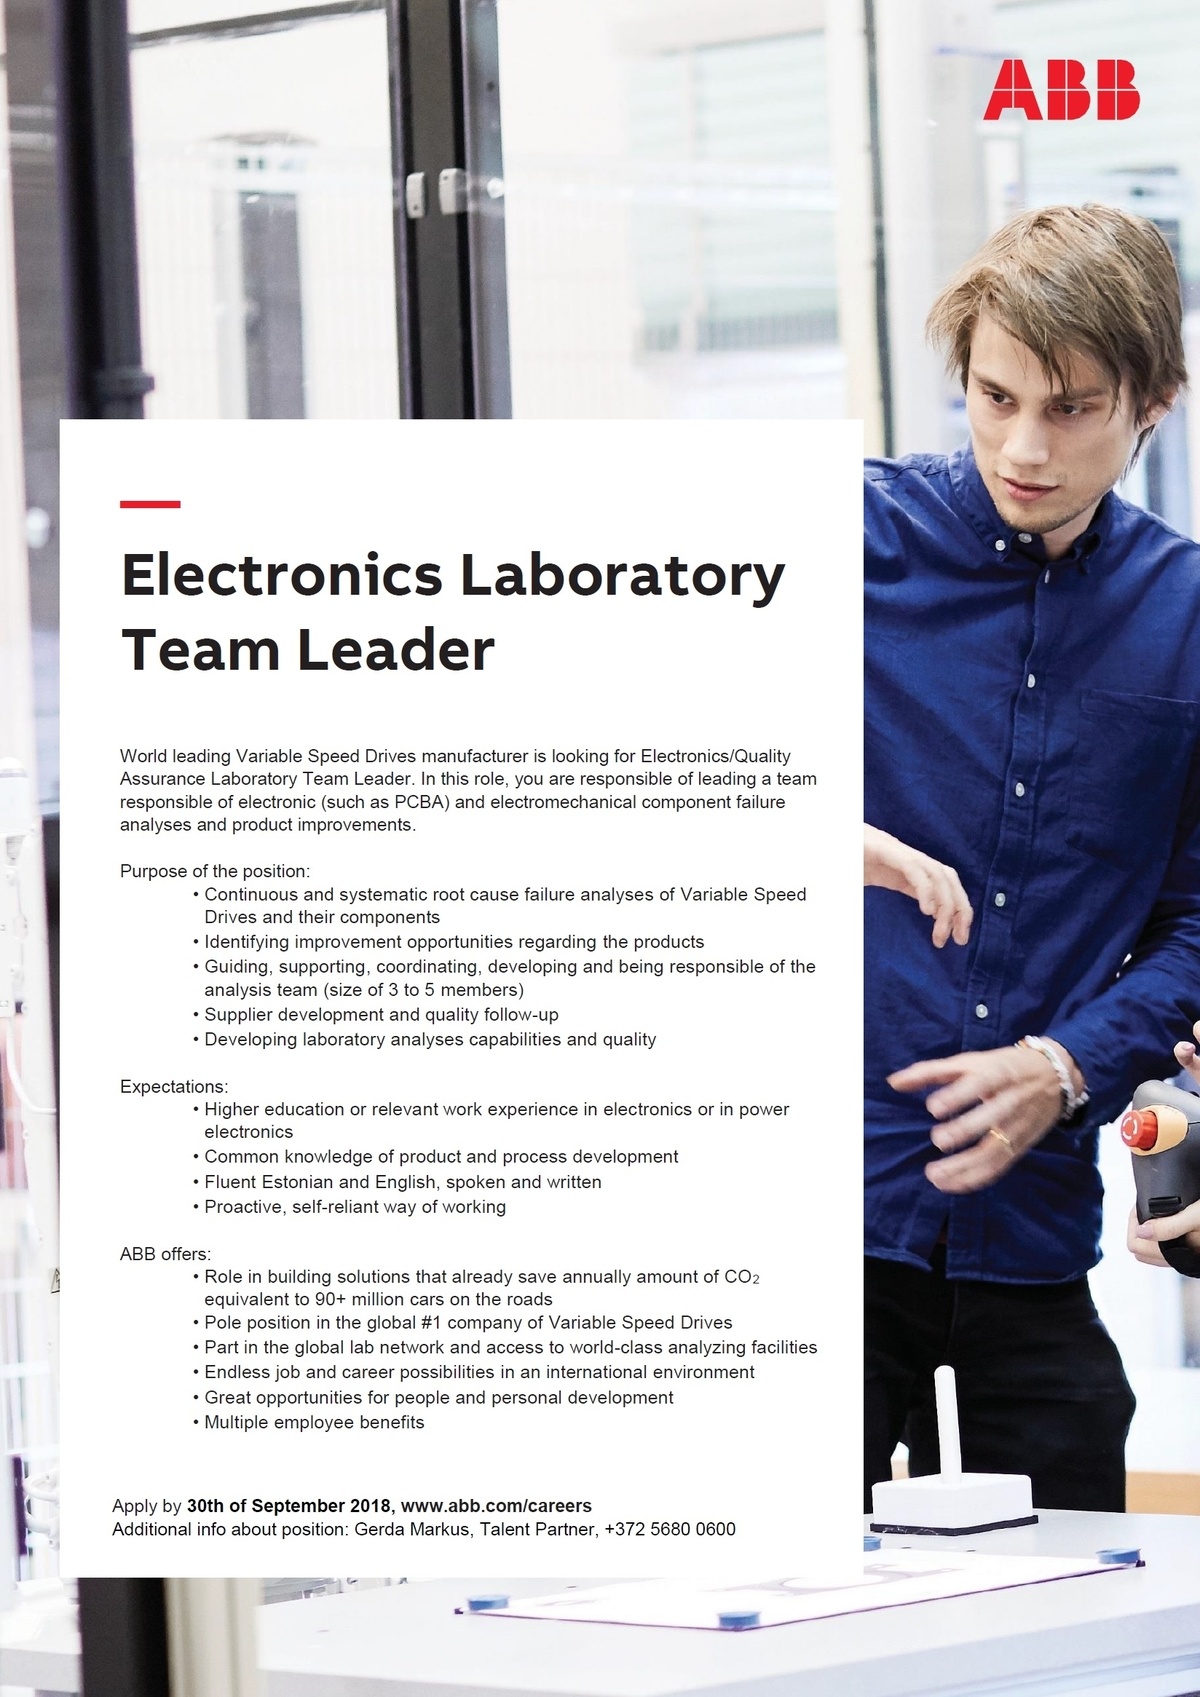 ABB AS Electronics Laboratory Team Leader